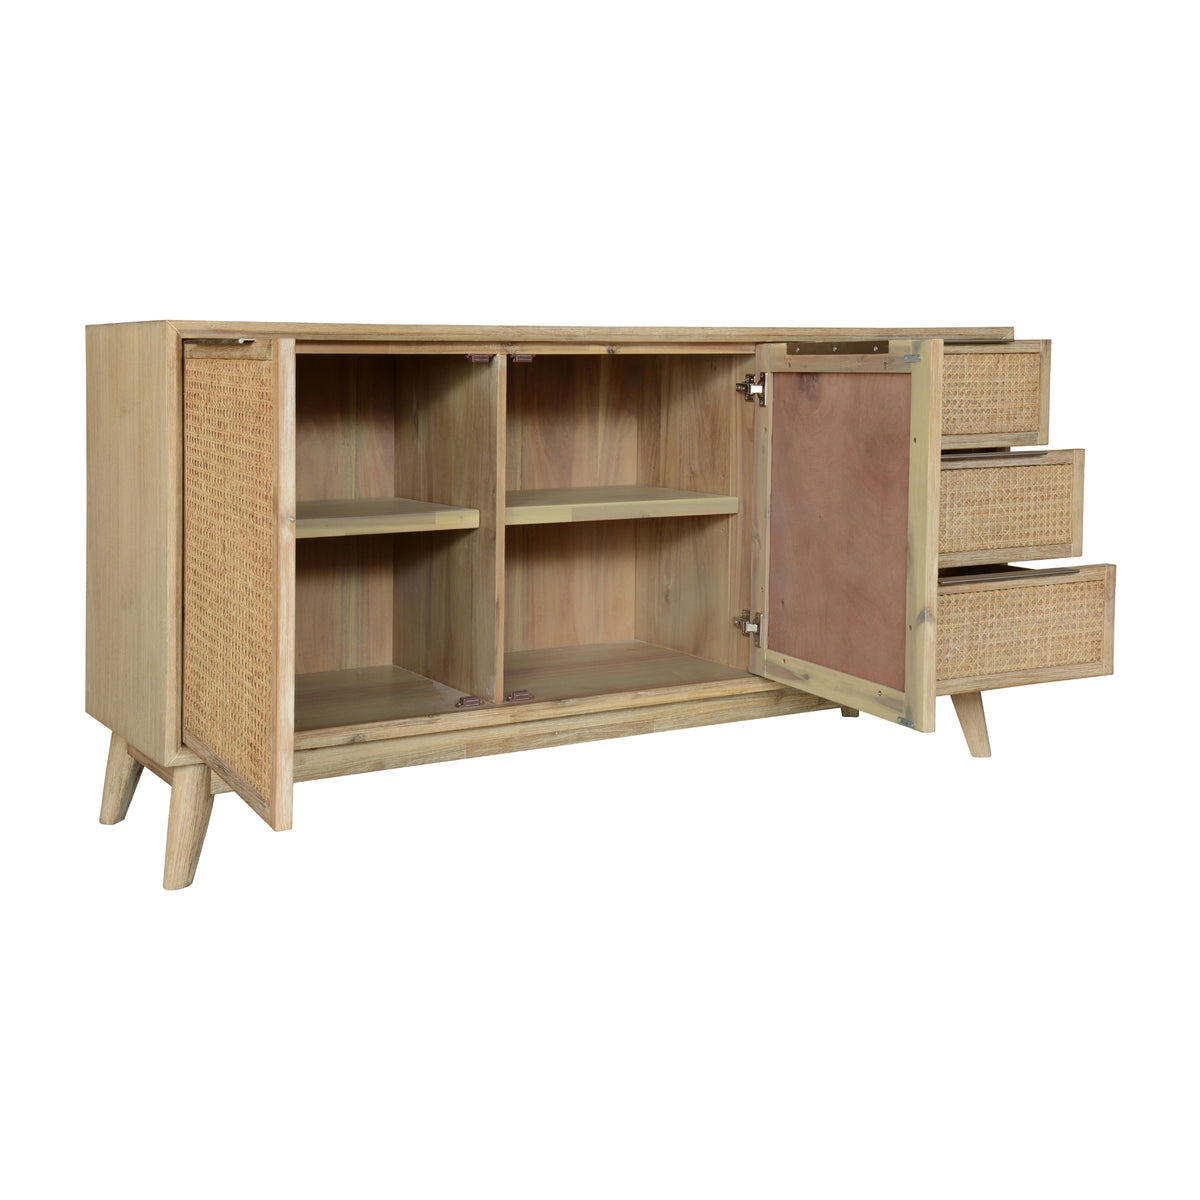 Grevillea Buffet Table 160cm 2 Door Solid Acacia Wood Rattan Furniture - Brown